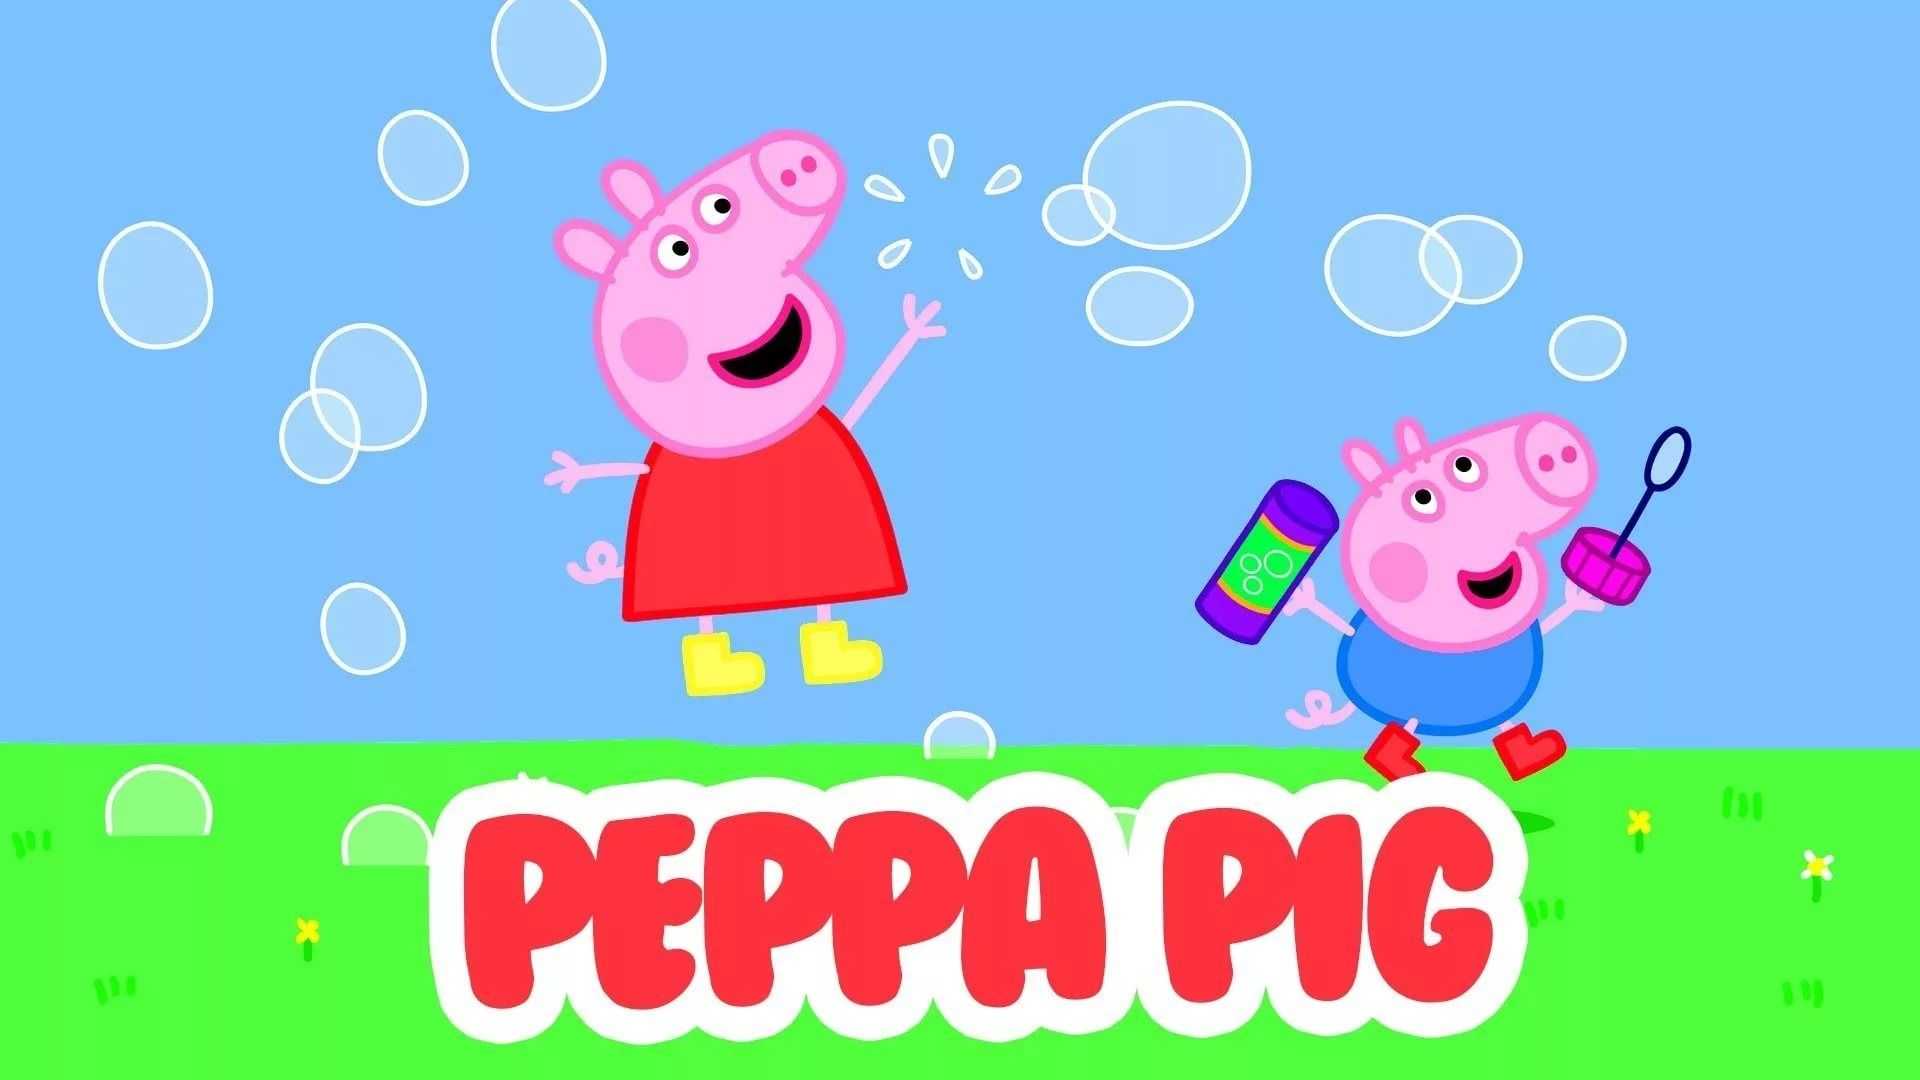 Peppa Pig Desktop Wallpaper - VoBss